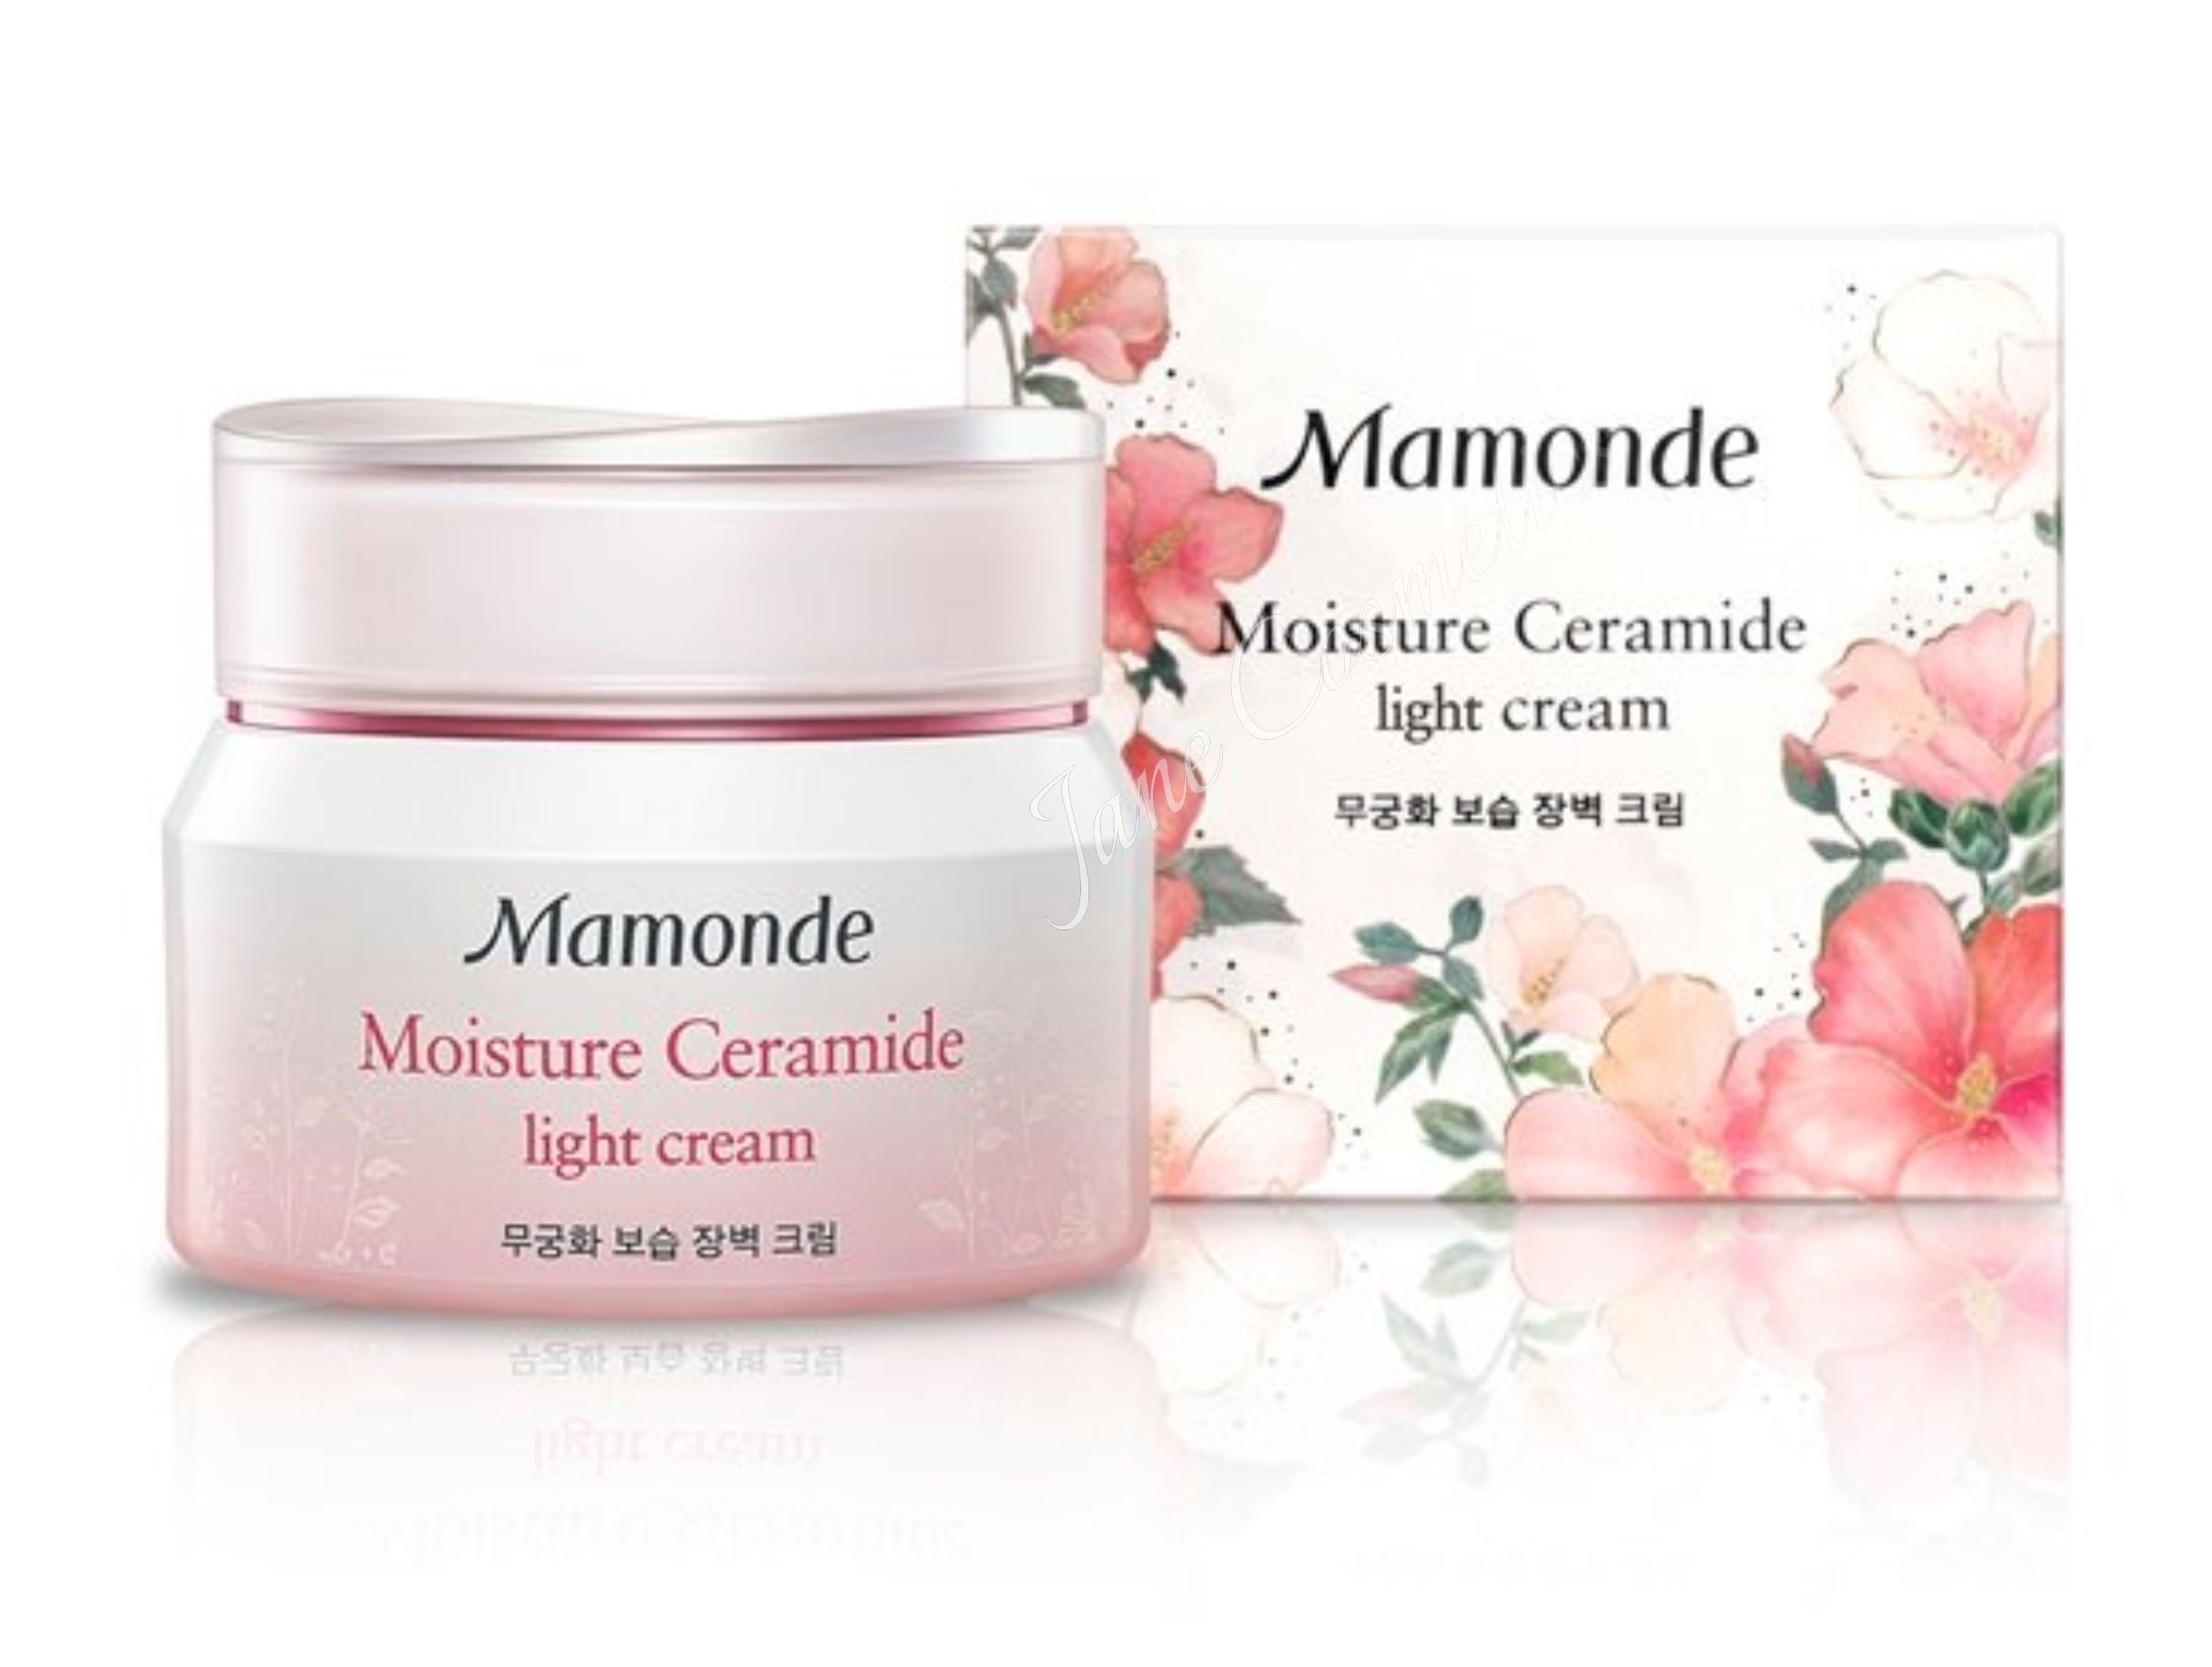 Mamonde Moisture Ceramide Light Cream